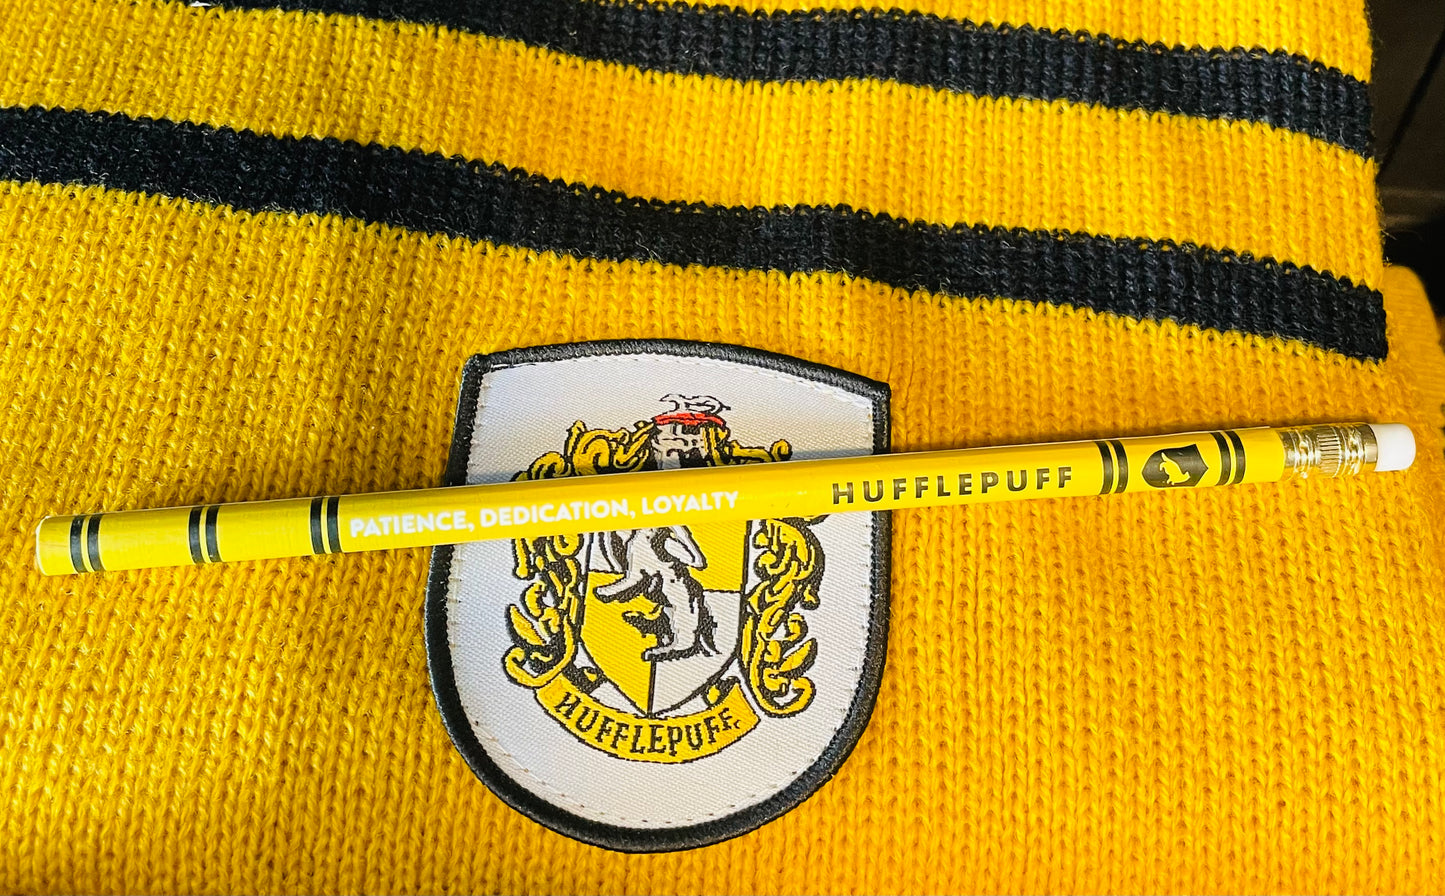 Hufflepuff pencil